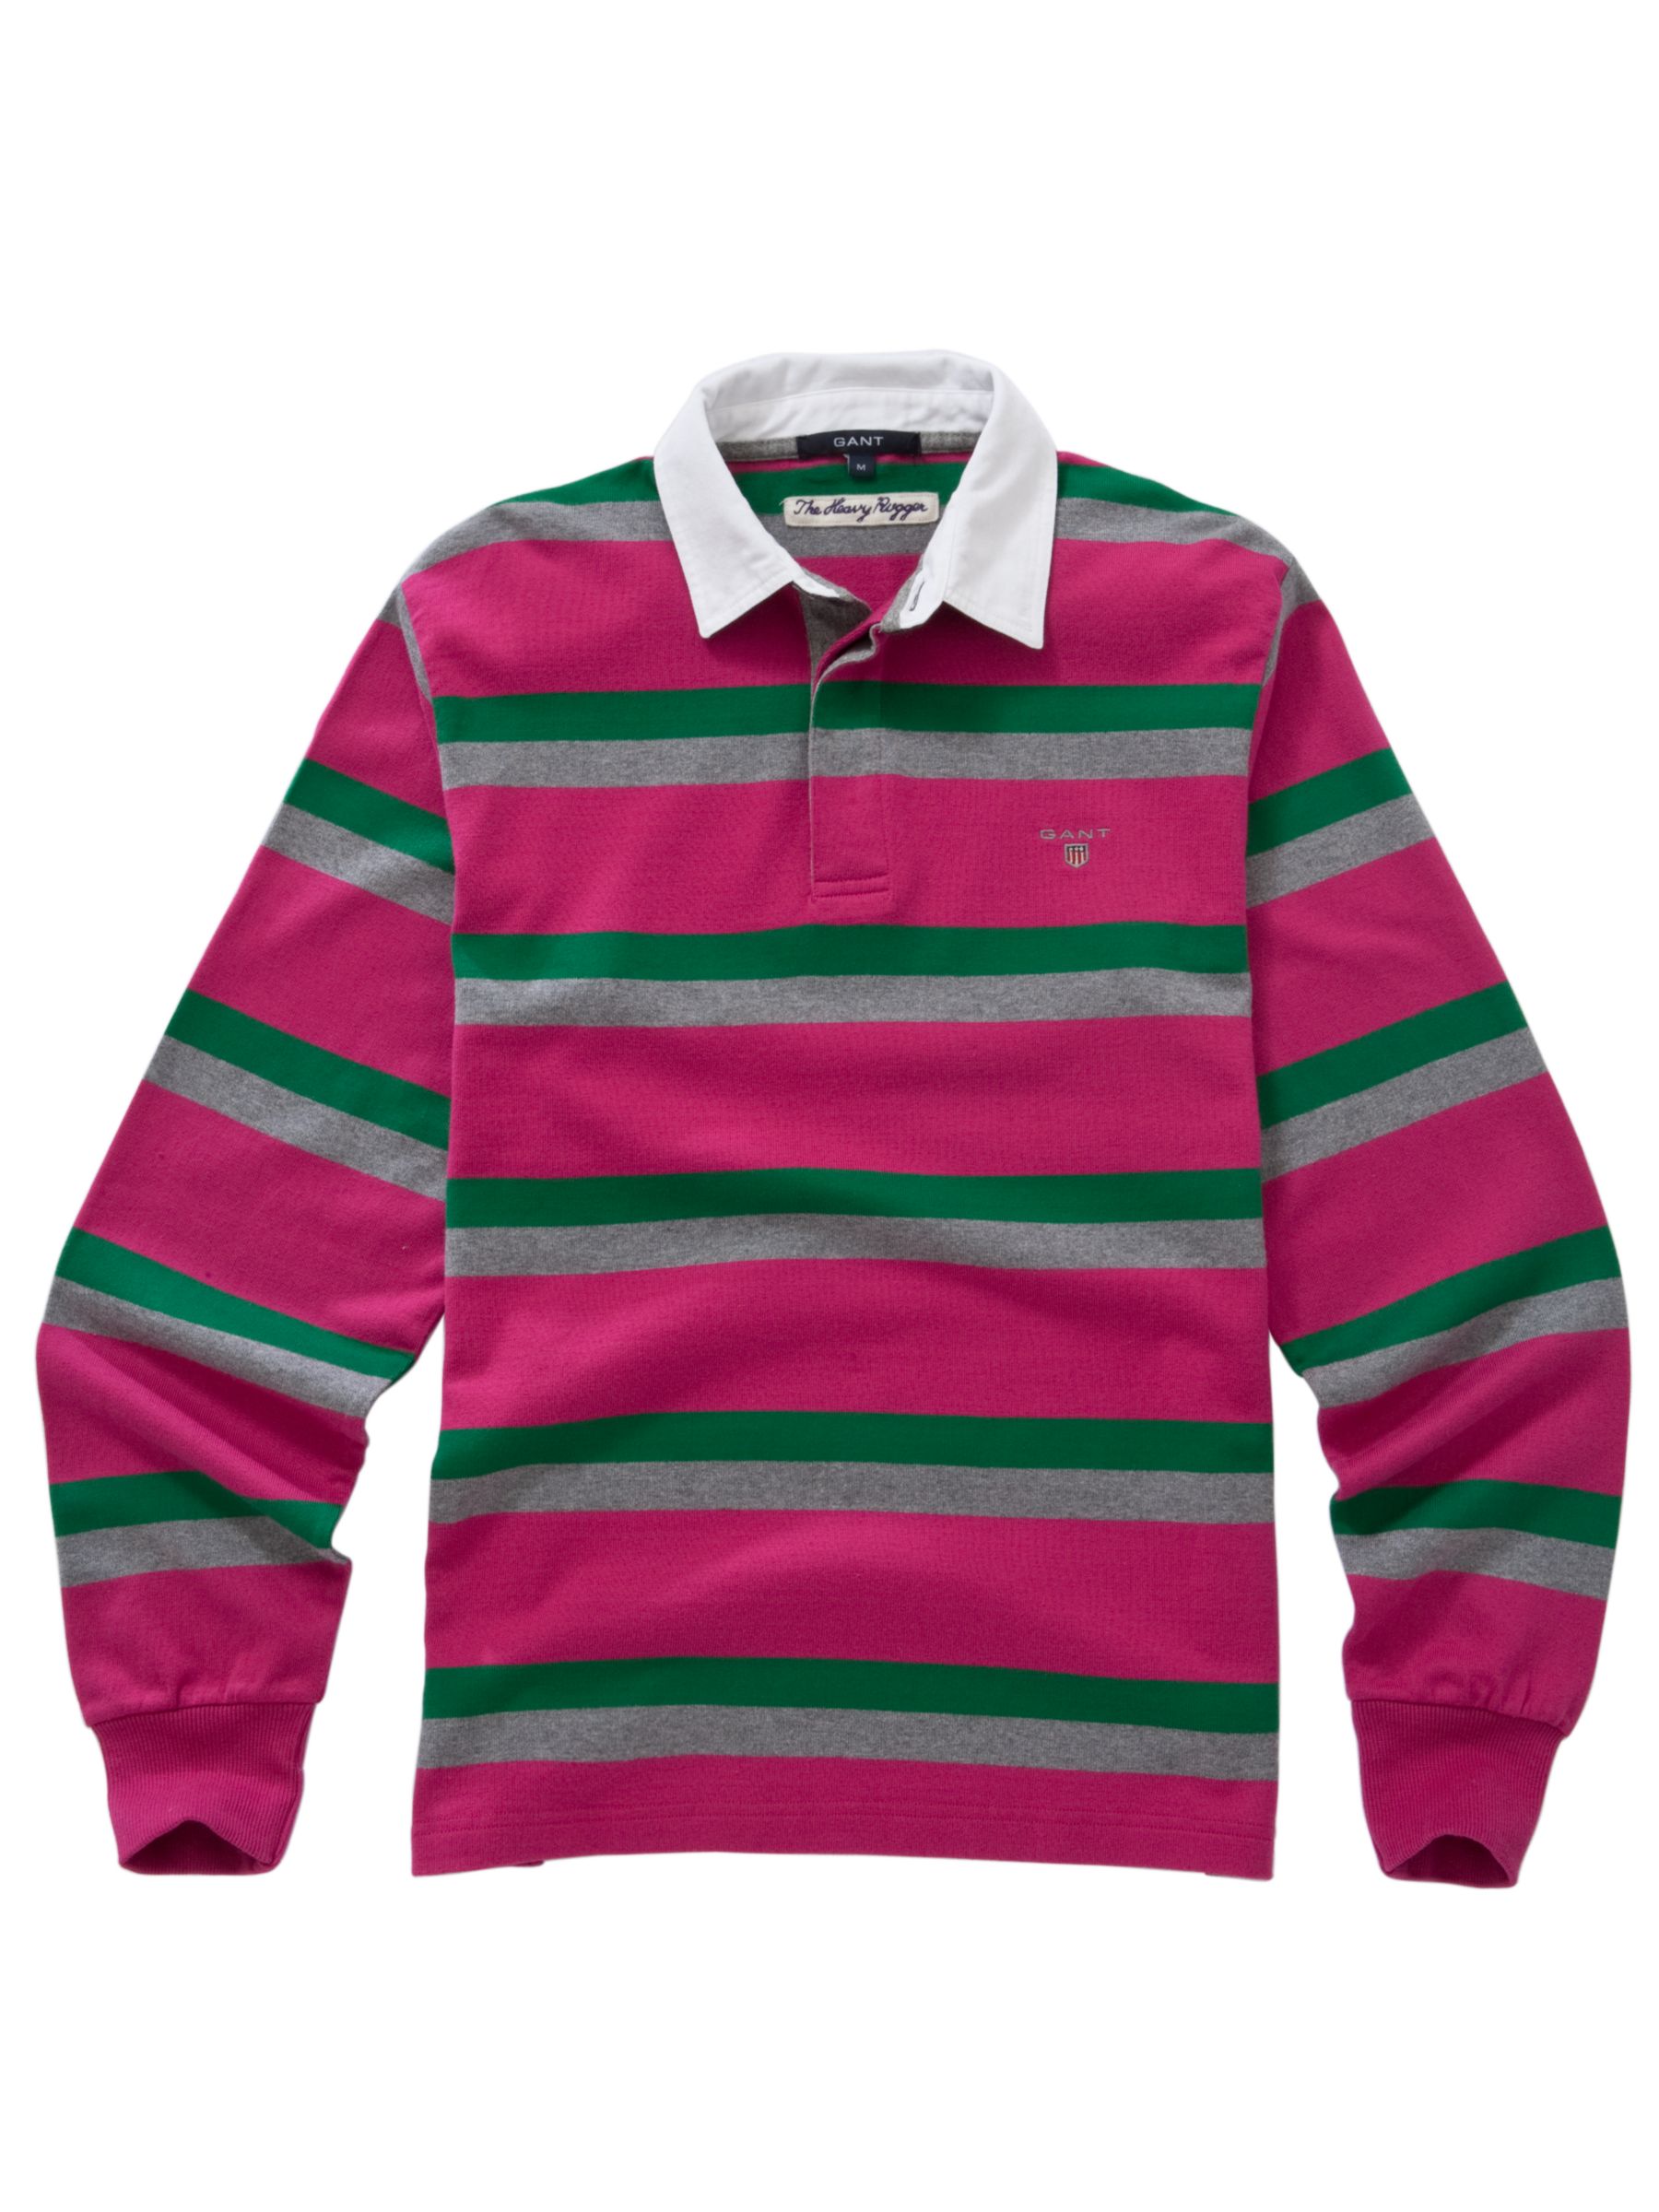 Georgetown Dual Stripe Rugby Shirt, Fuchsia